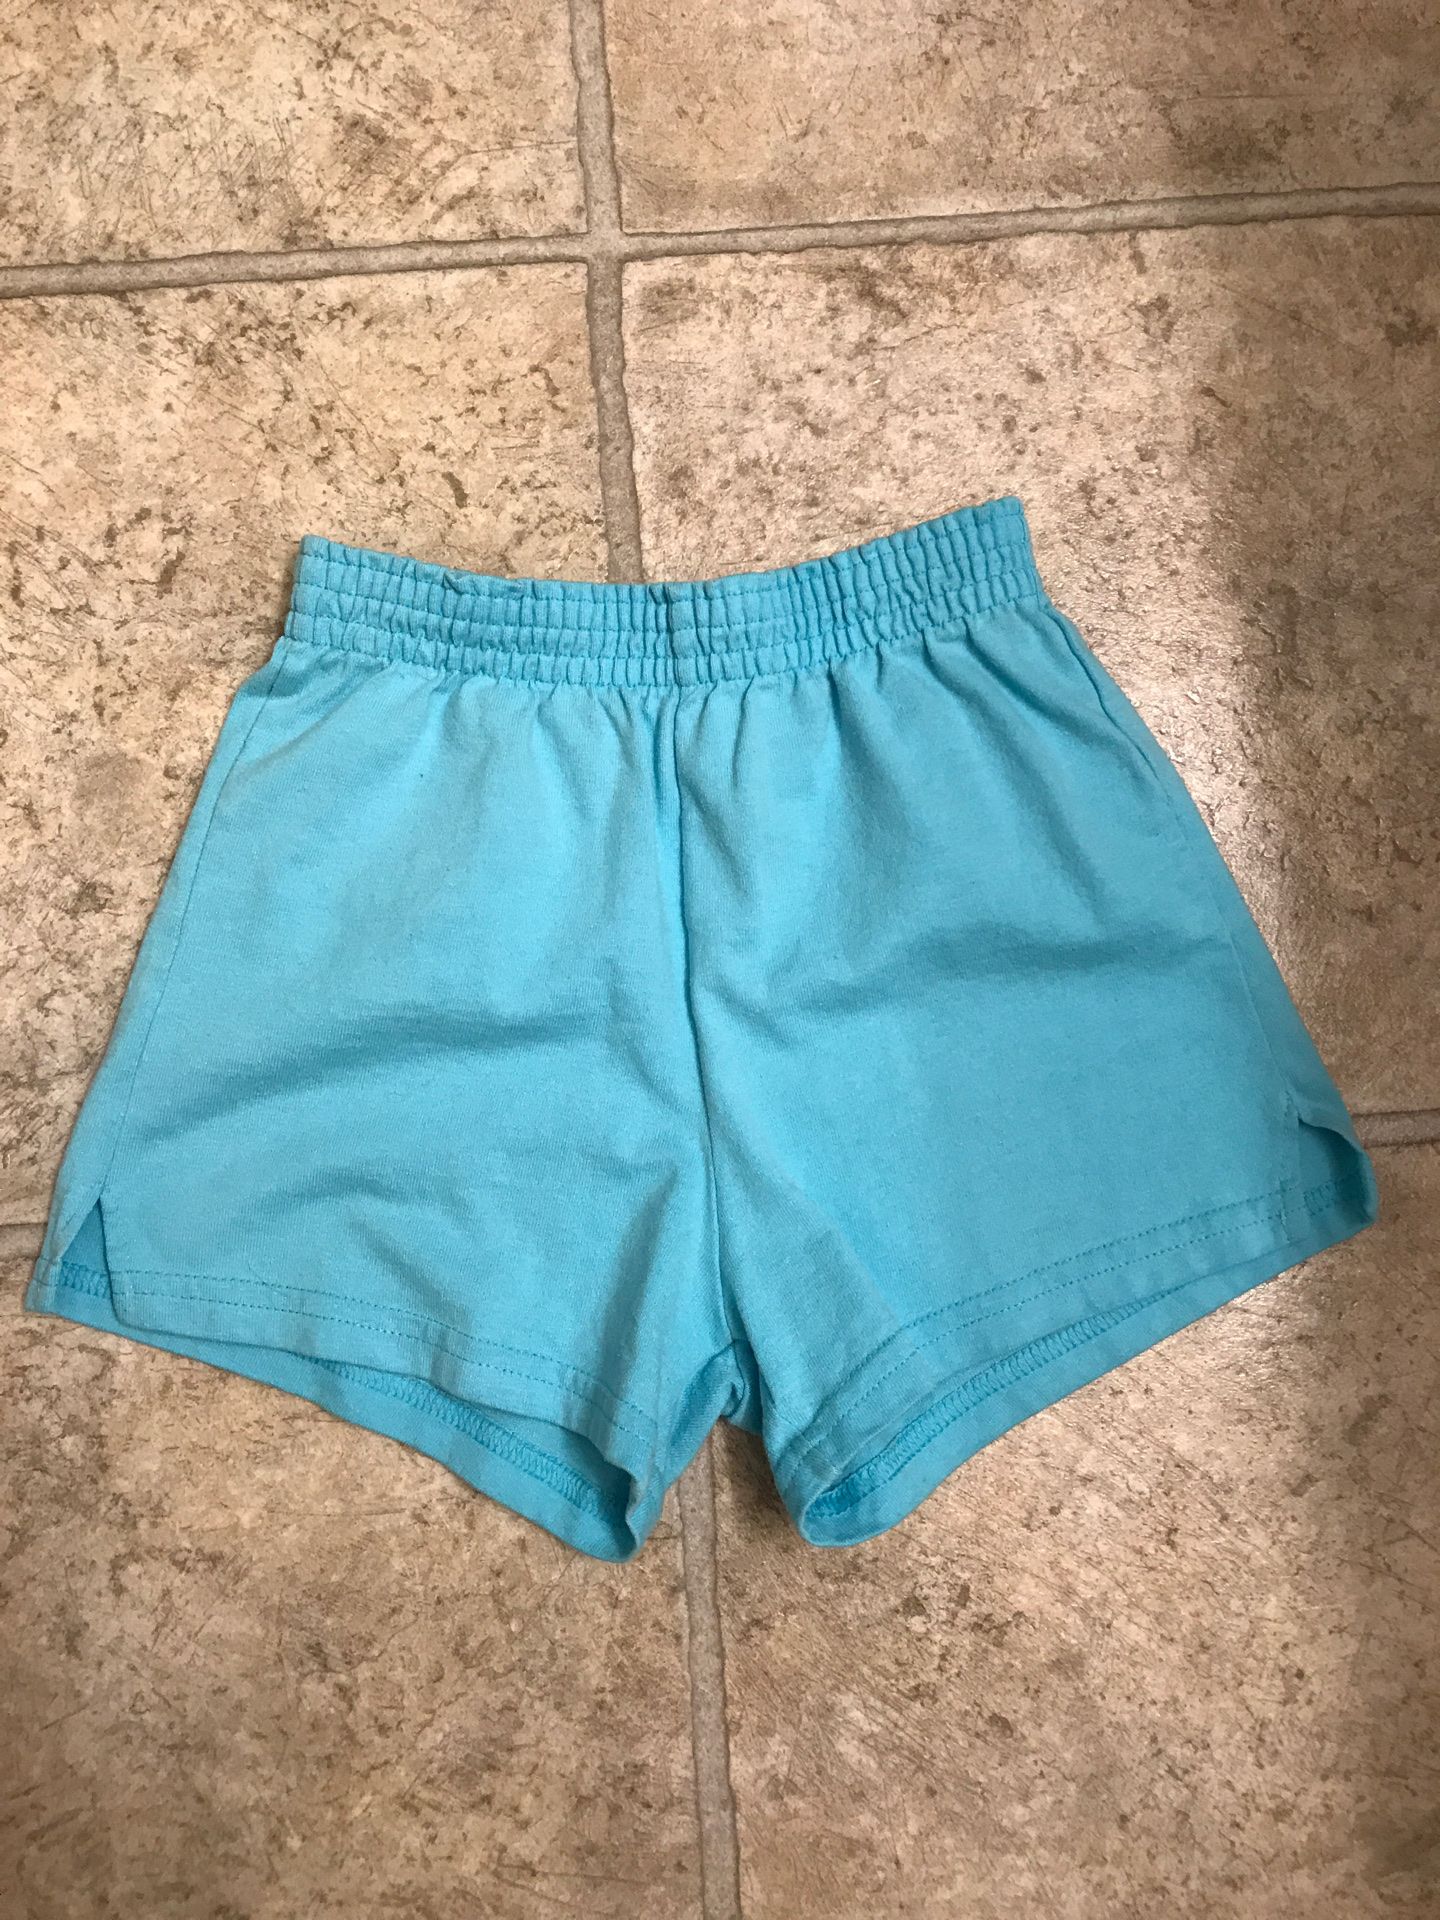 Girls 8/10 Shorts